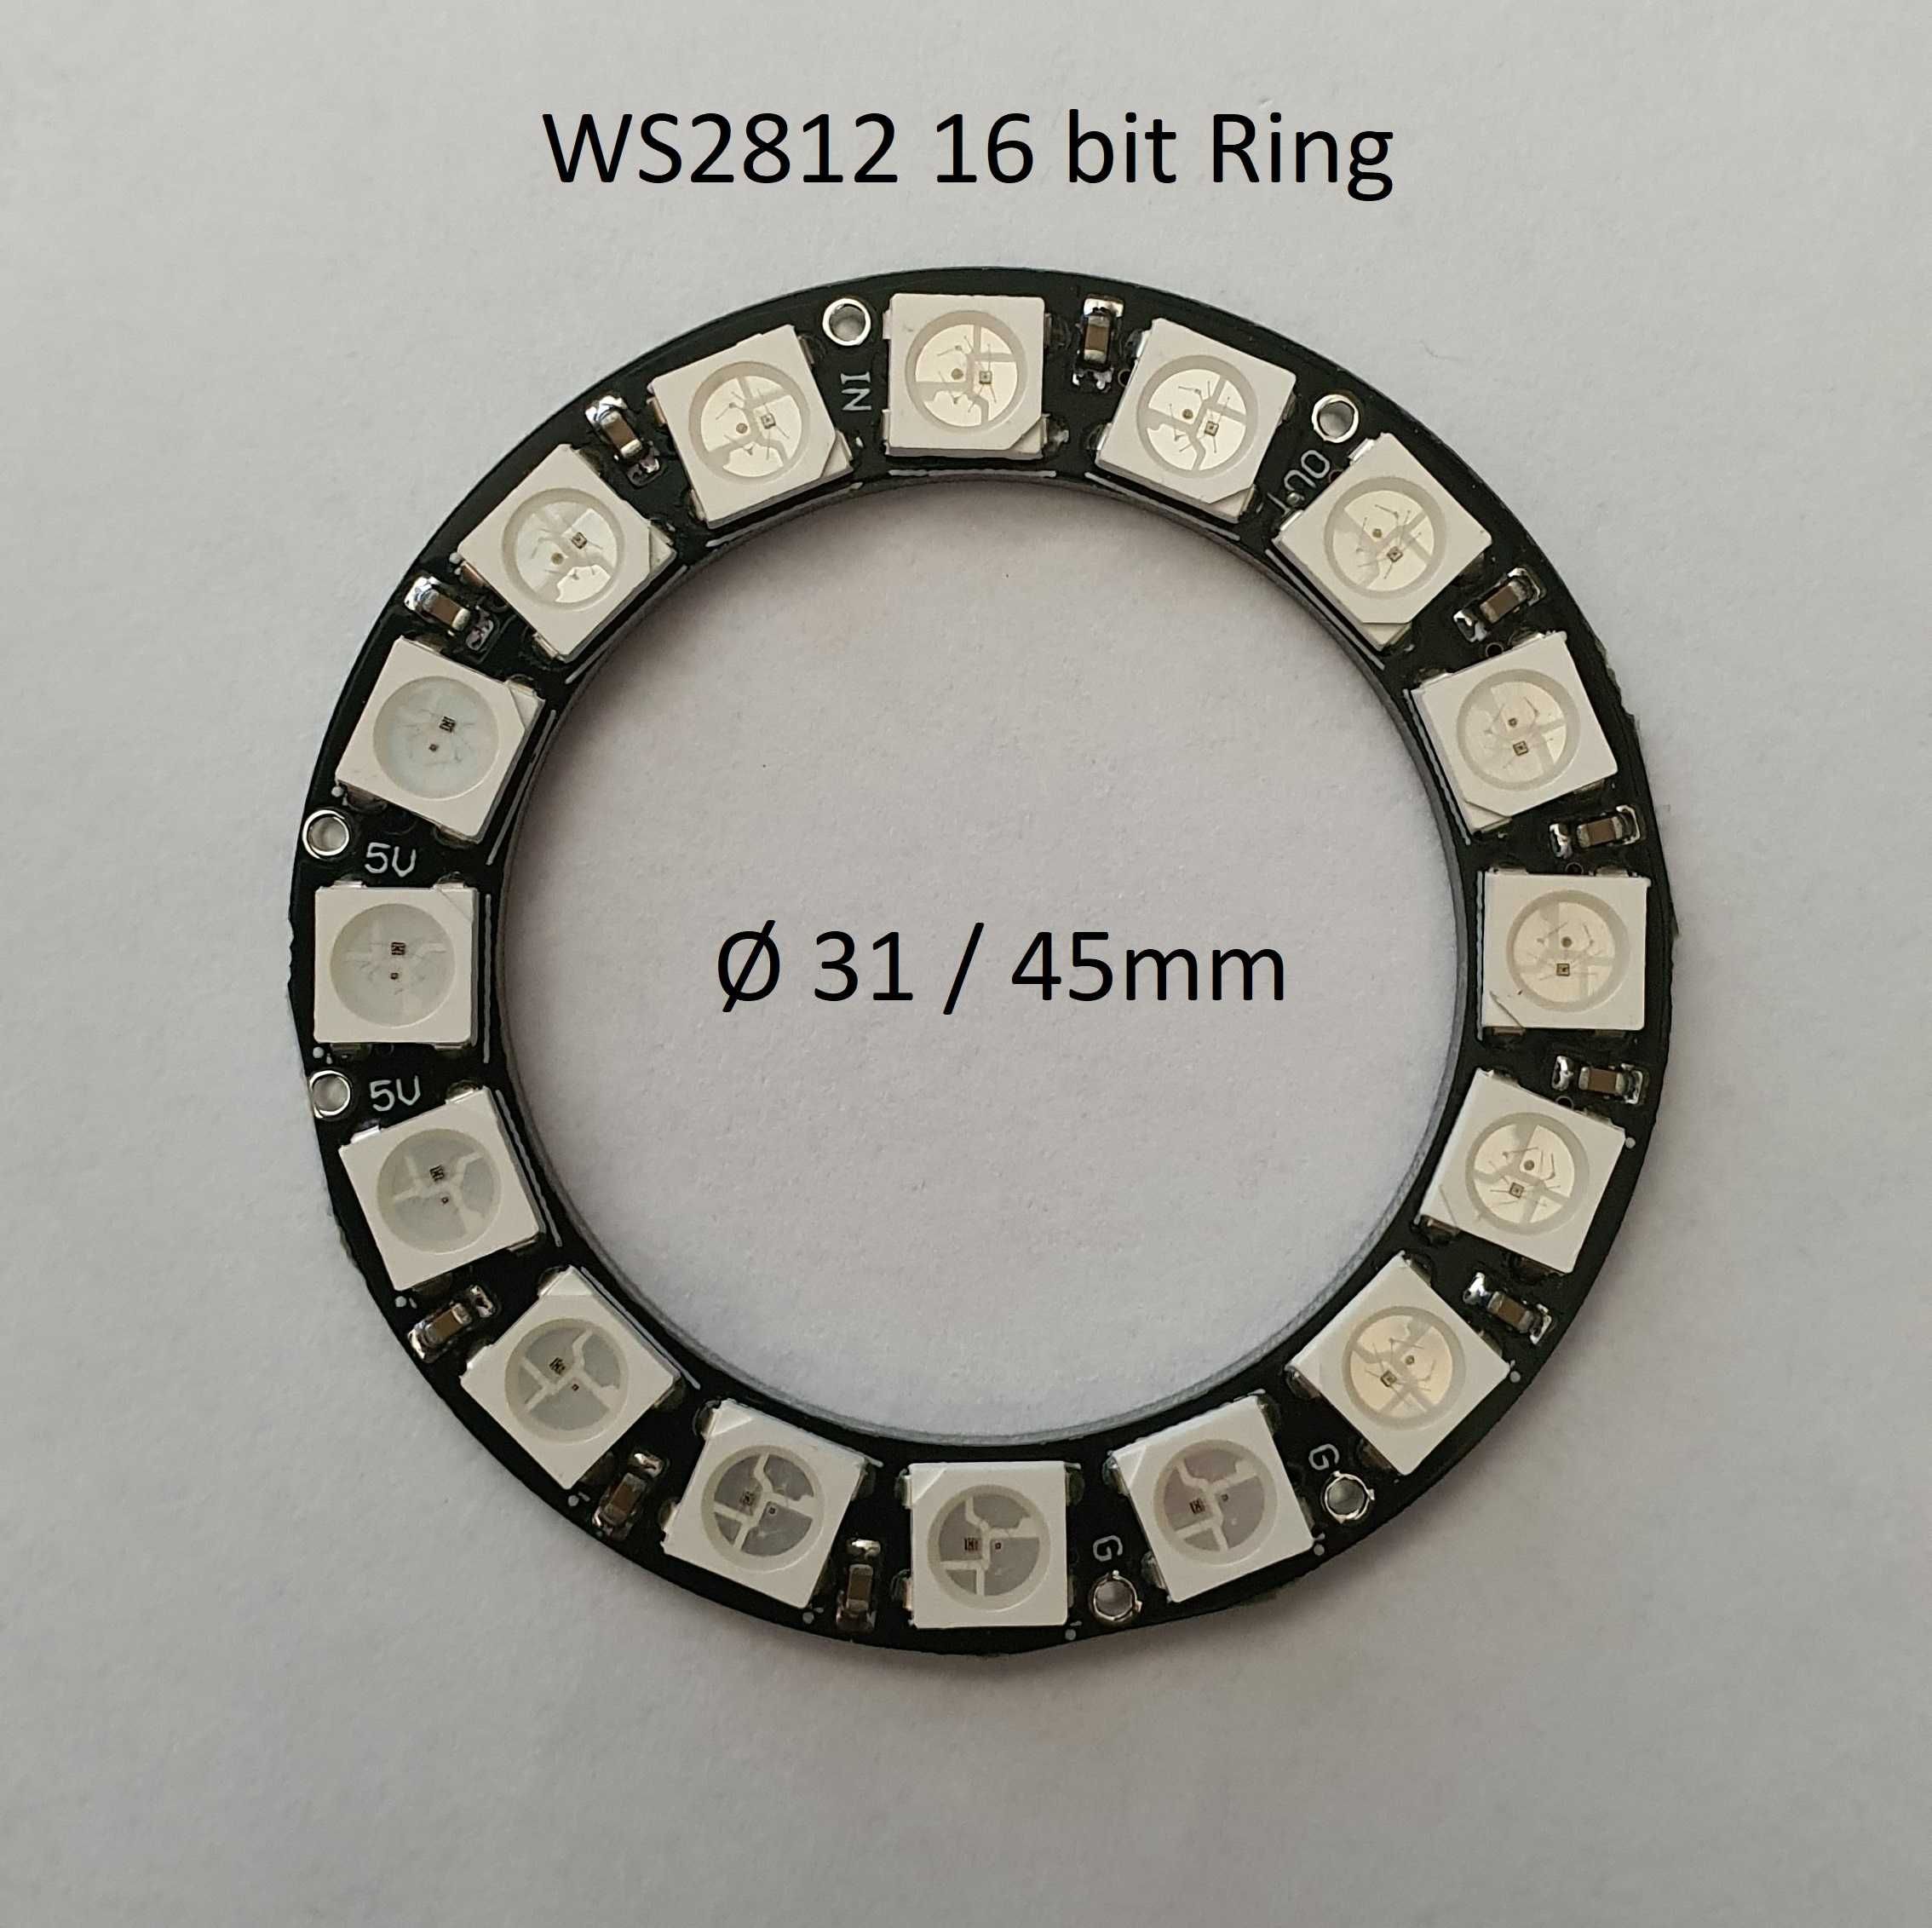 WS2812 Led strip, 8bit, Ring: 8,16,24,32 bit, matrix: 8x8, 8x32, 16x16